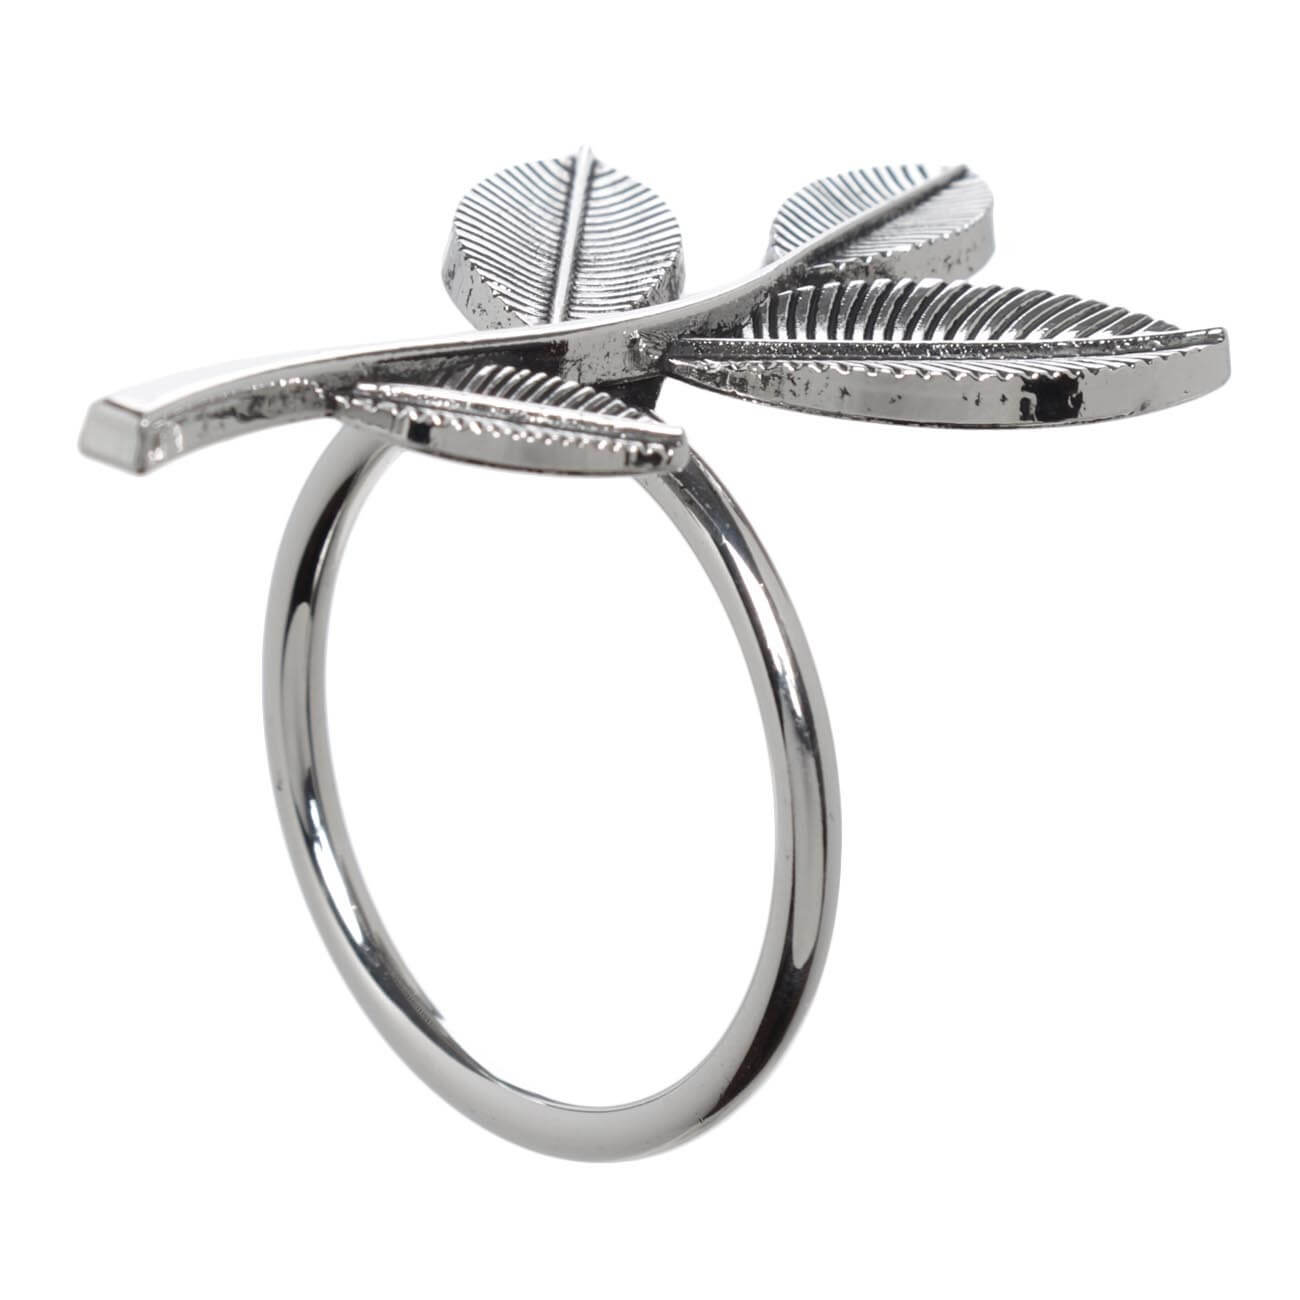 kuchenland кольцо для салфеток 5 см 2 шт металл серебристое перо feather Кольцо для салфеток, 6 см, металл, серебристое, Ветка с листьями, Print